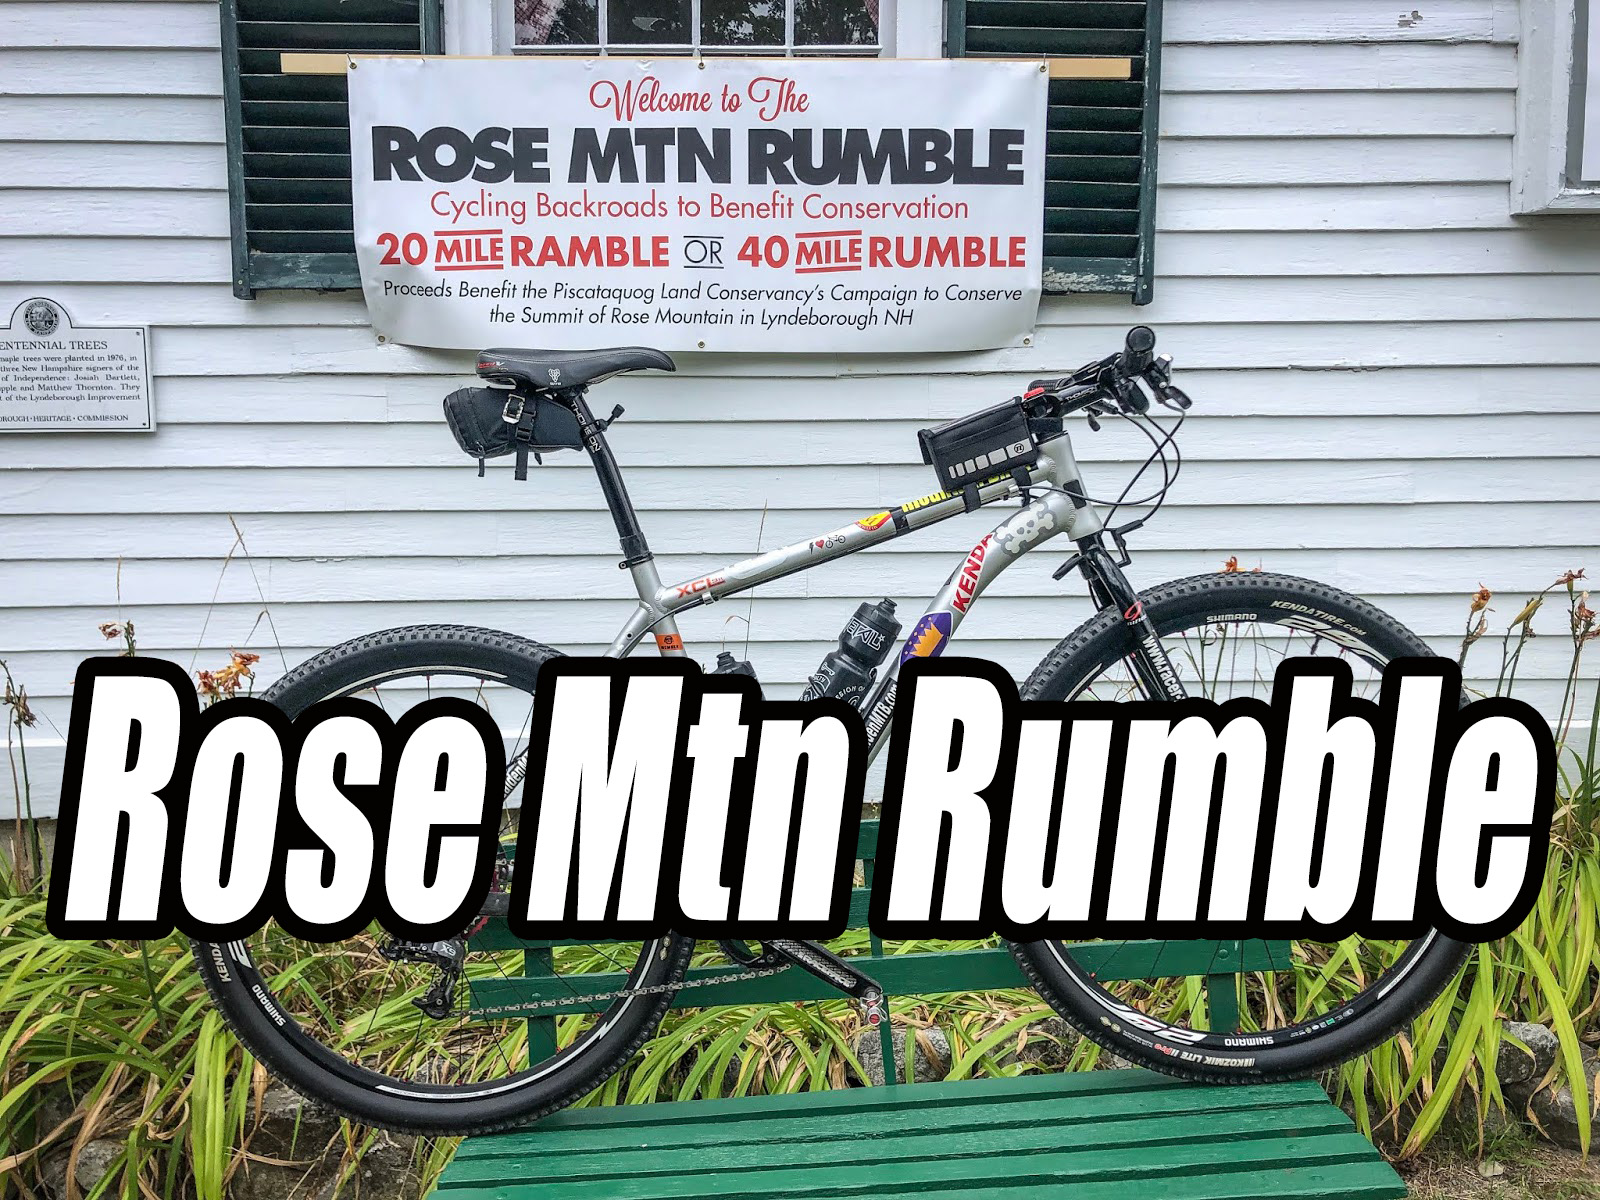 Rose Mountain Rumble